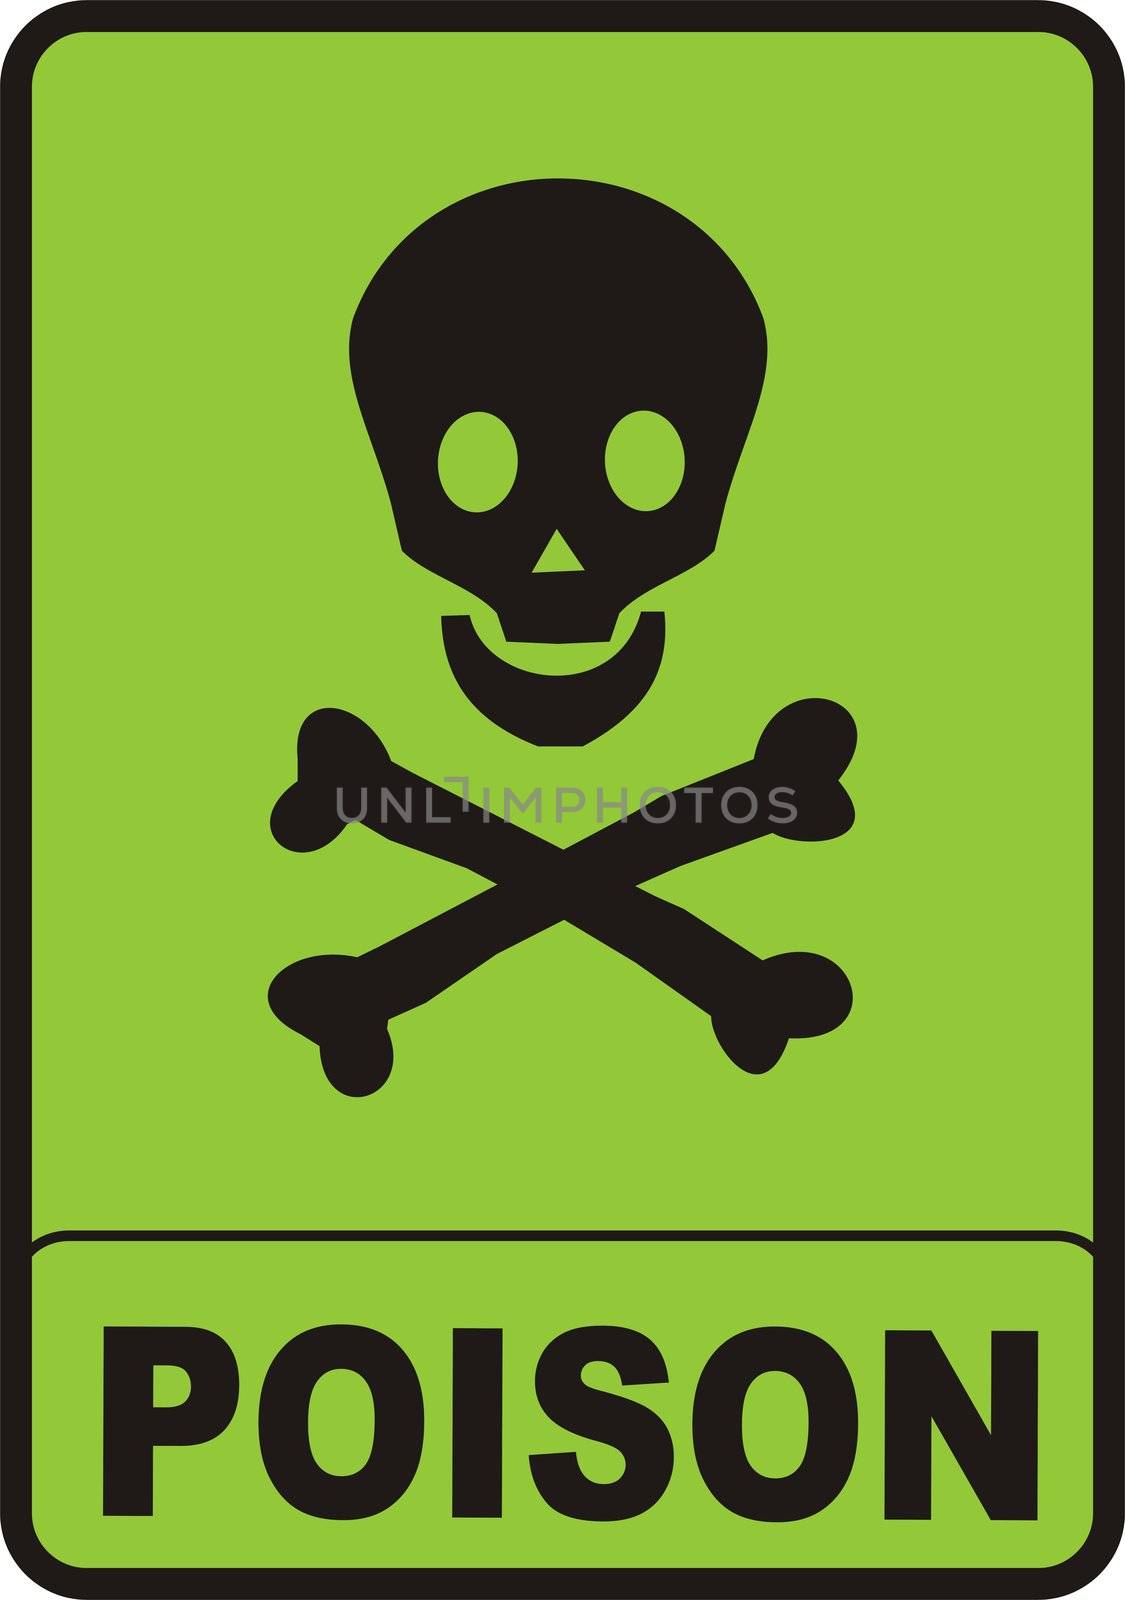 Poison by tony4urban